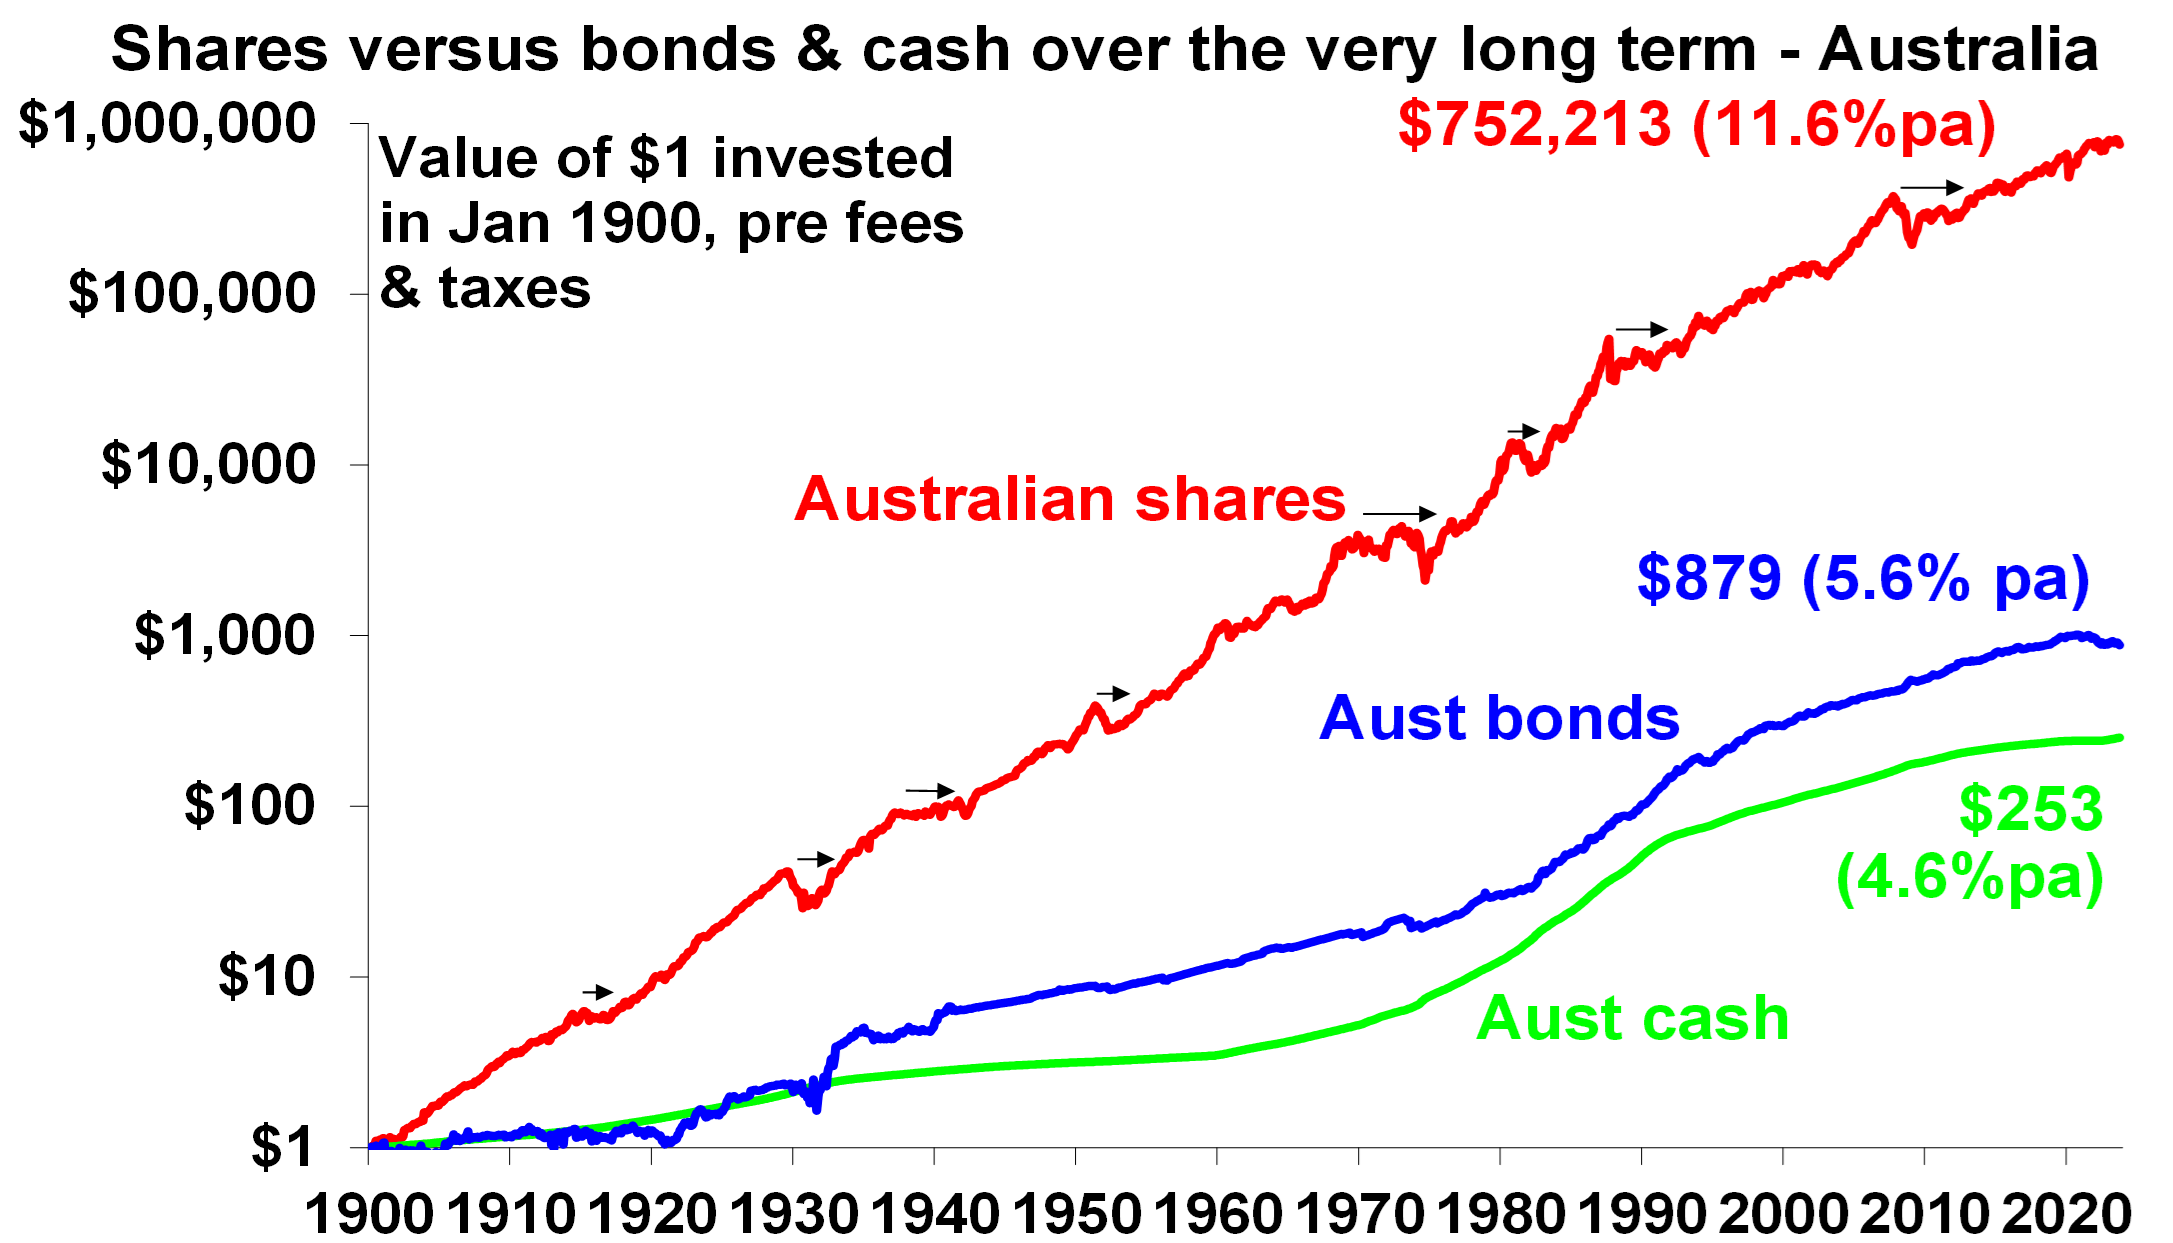 Shares versus bonds and cash over the very long term Australia